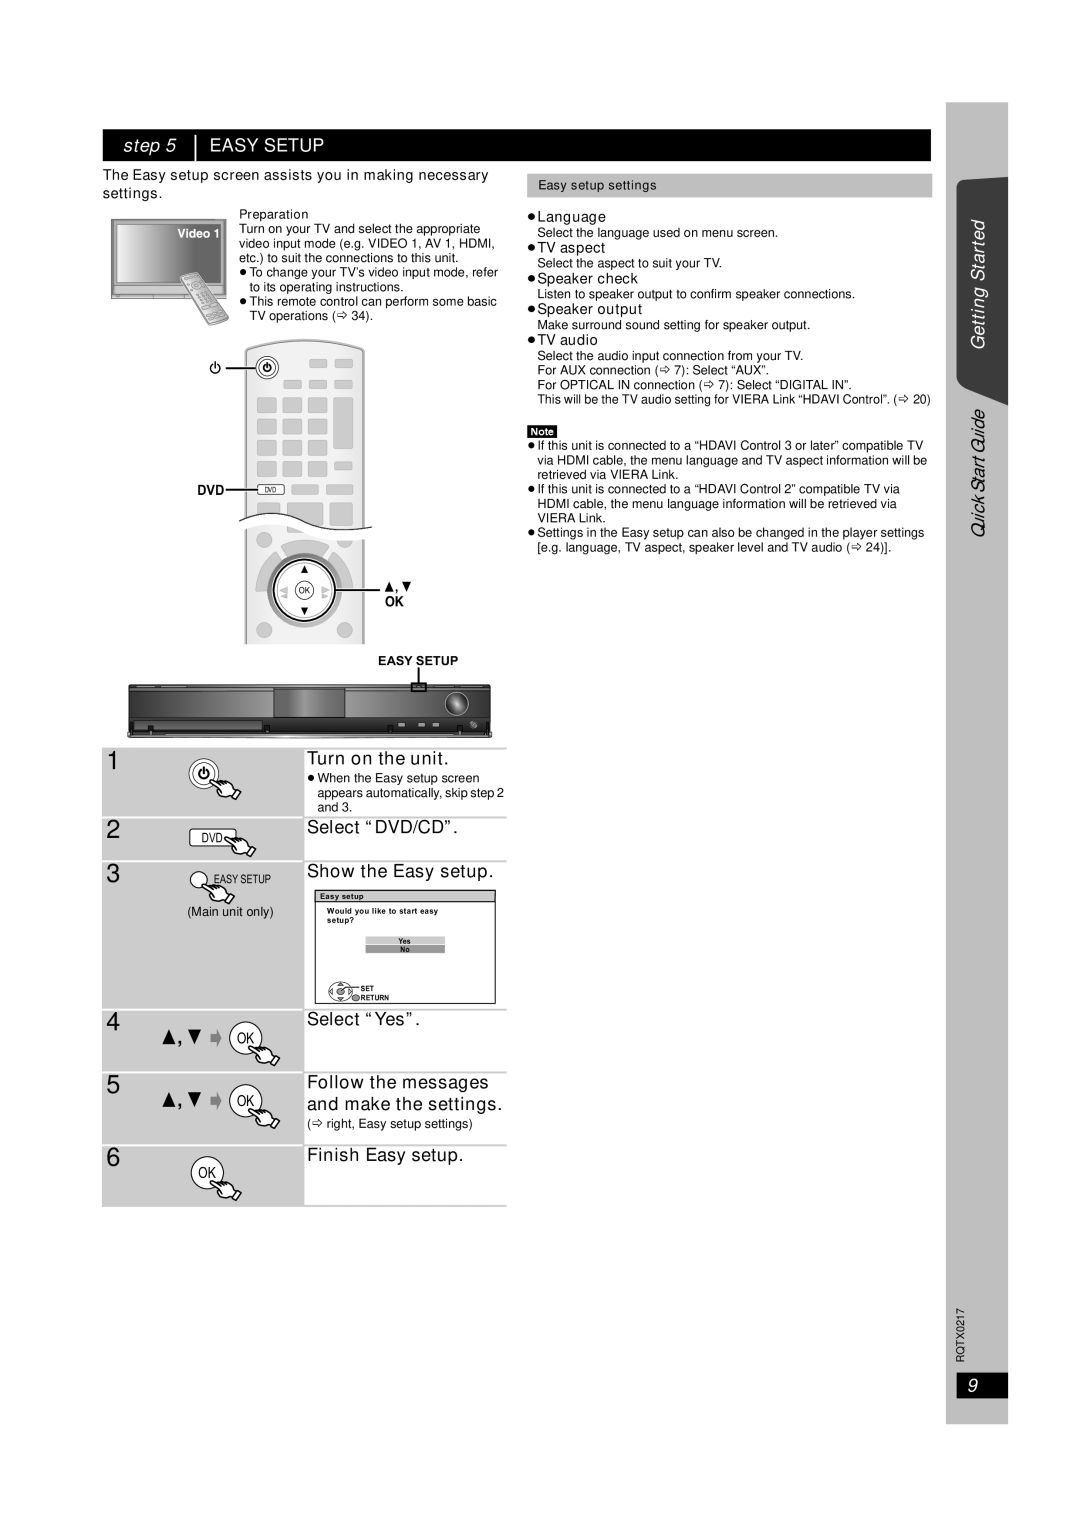 Panasonic SC-PT464 1 2, Easy Setup, Turn on the unit, Select “DVD/CD” Show the Easy setup, Select “Yes”, Finish Easy setup 